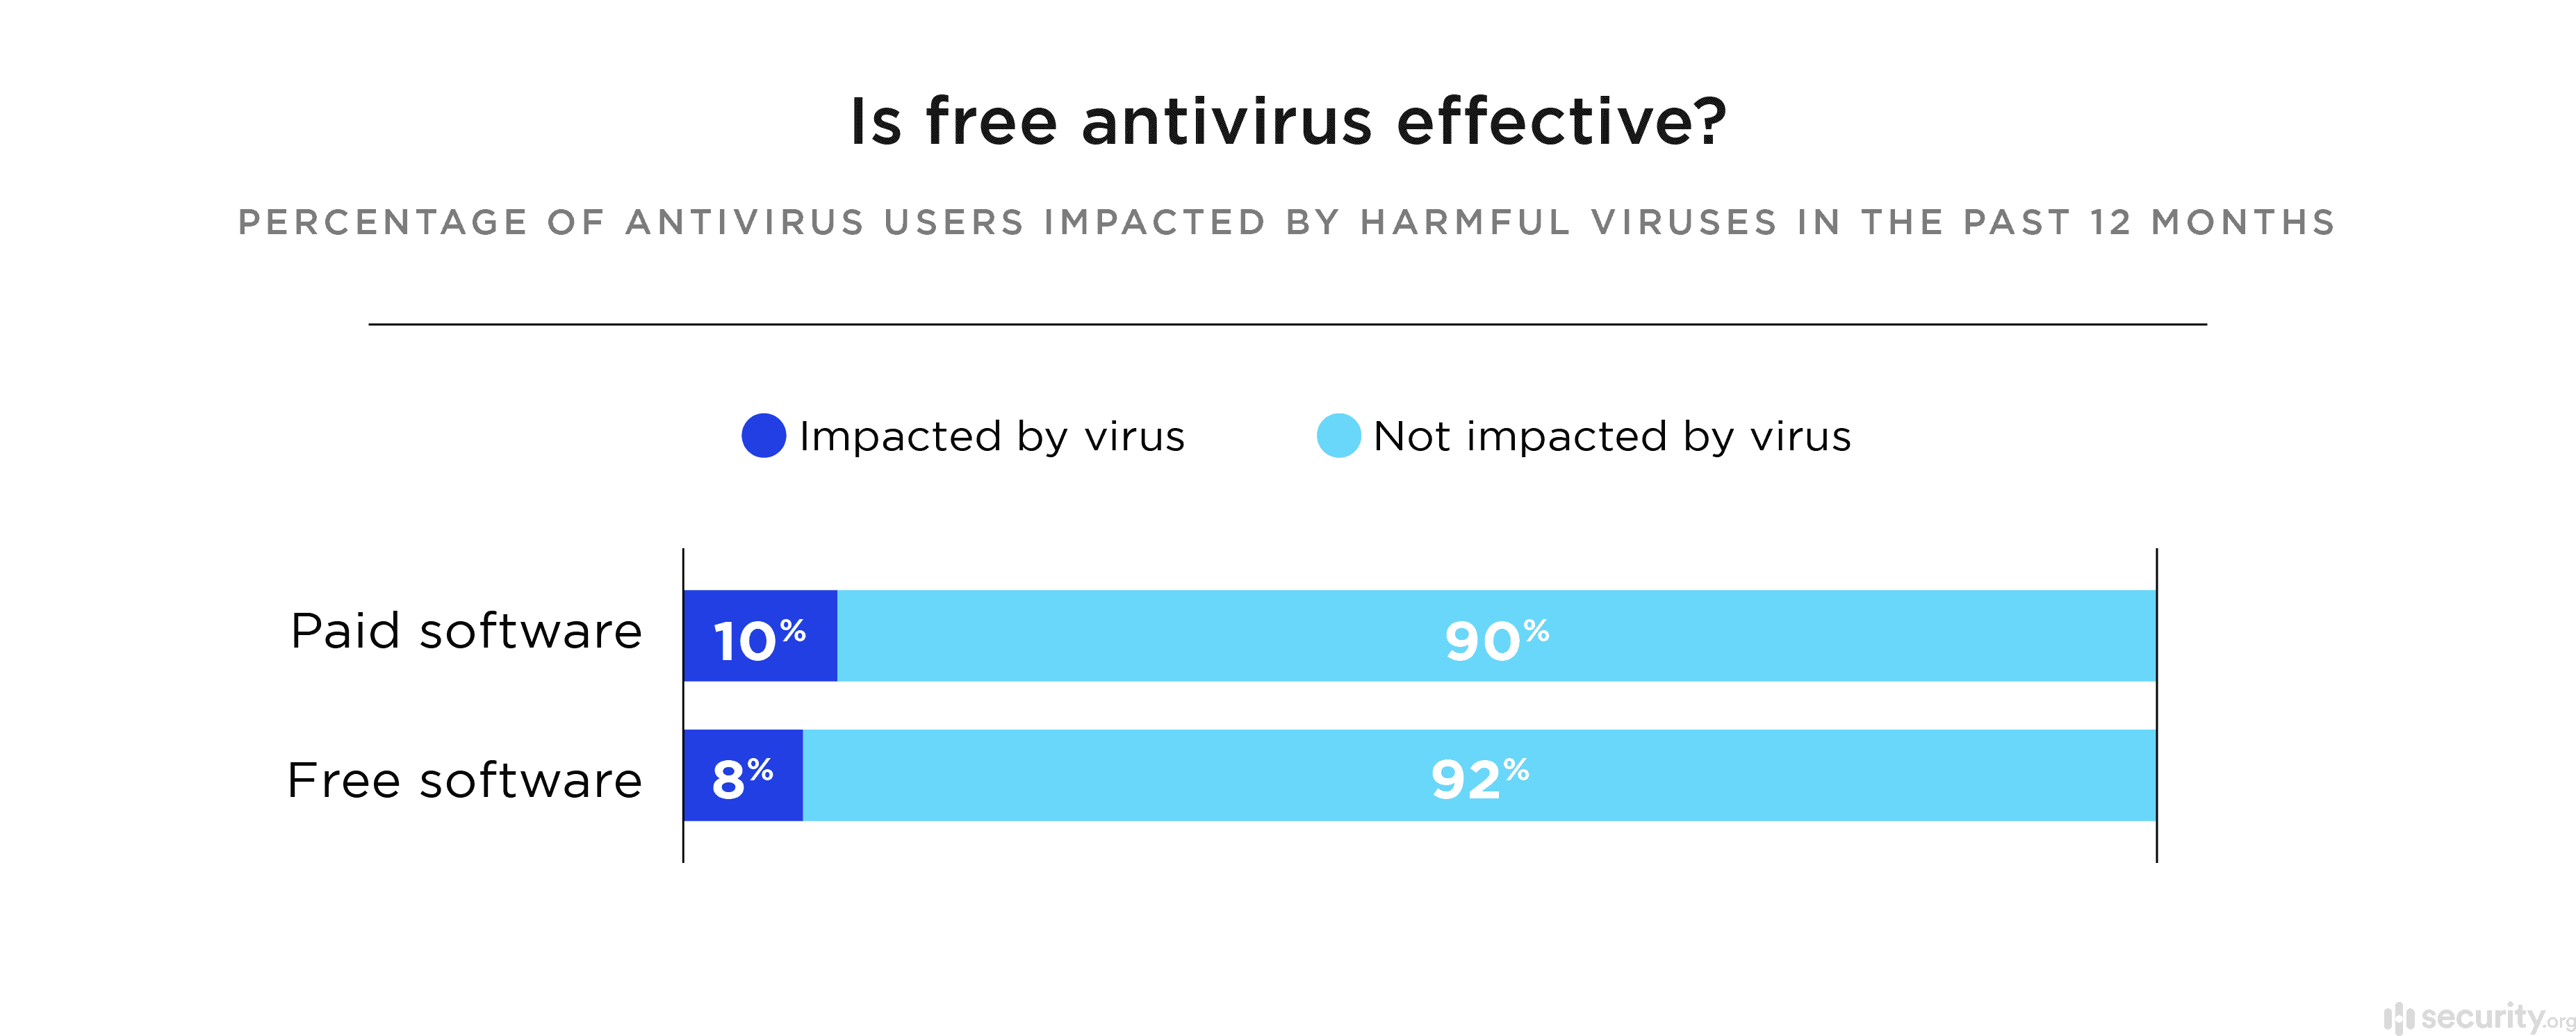 Is free antivirus effective